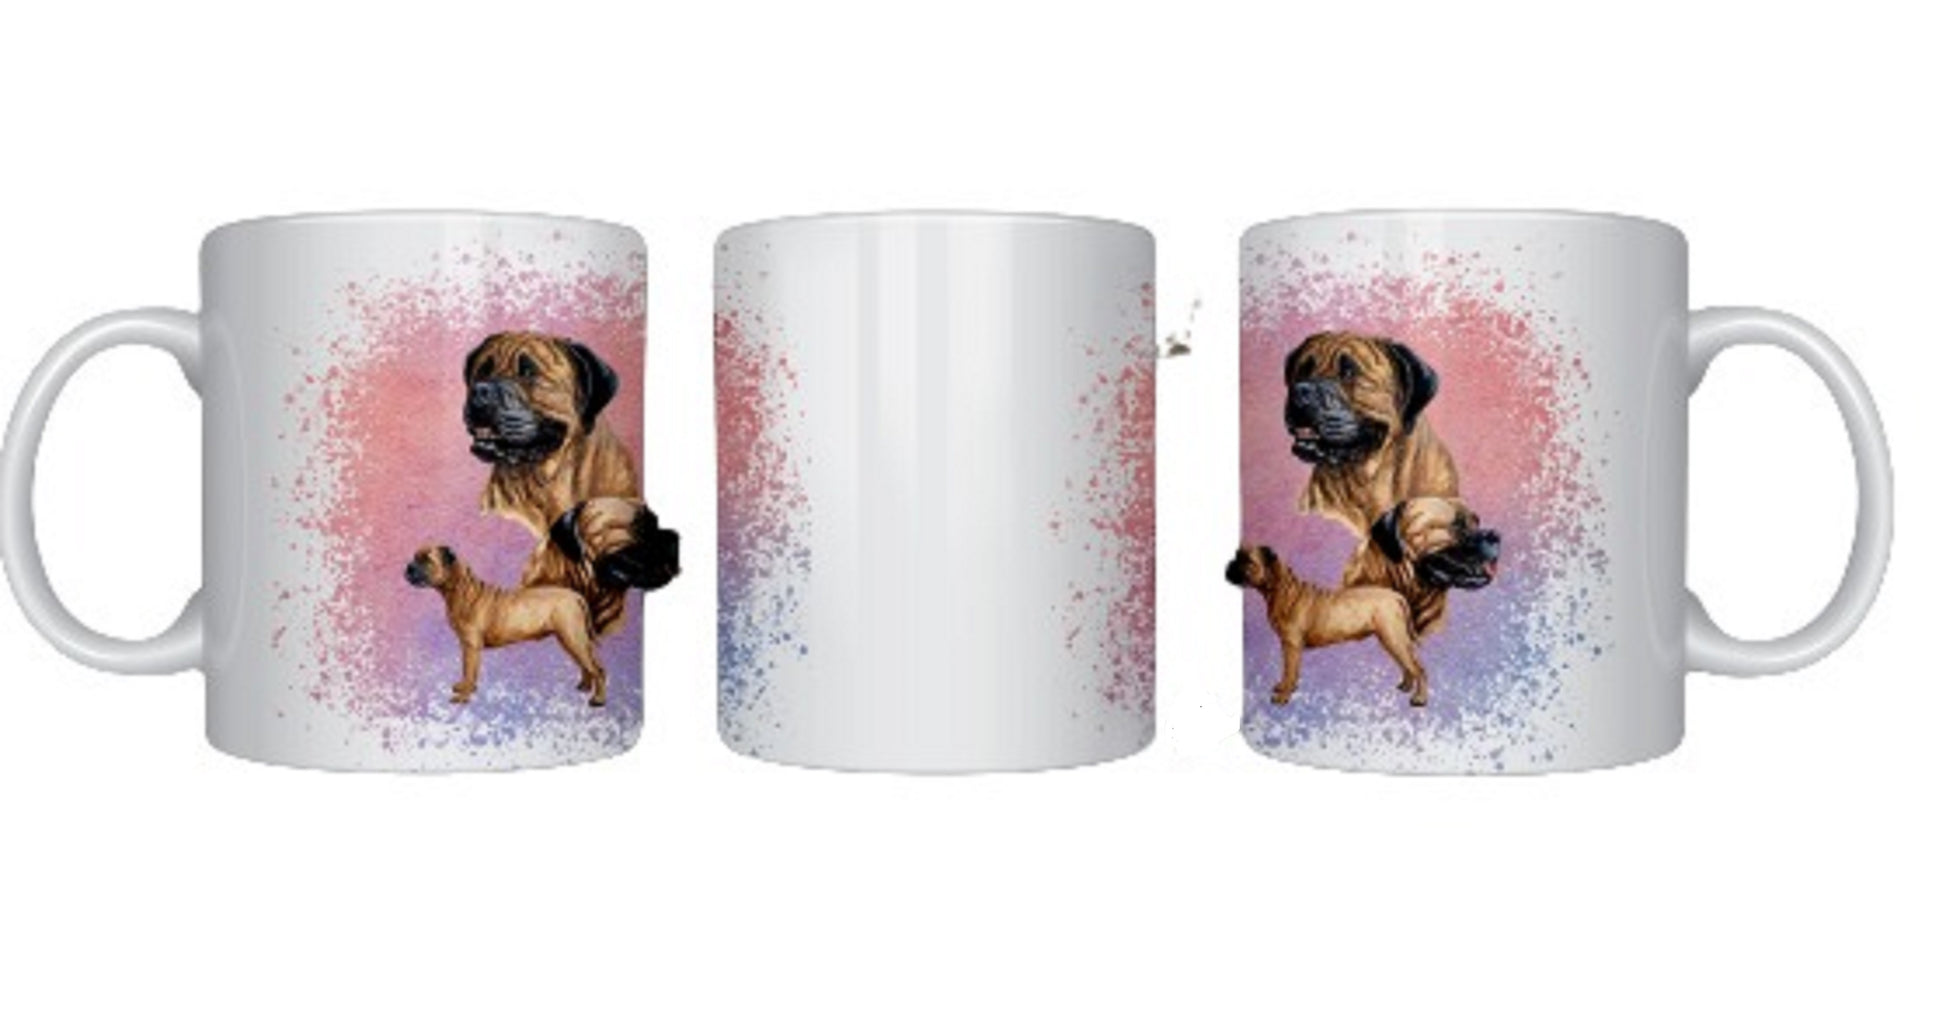  Dog De Bordeaux Dog Coffee Mug by Free Spirit Accessories sold by Free Spirit Accessories